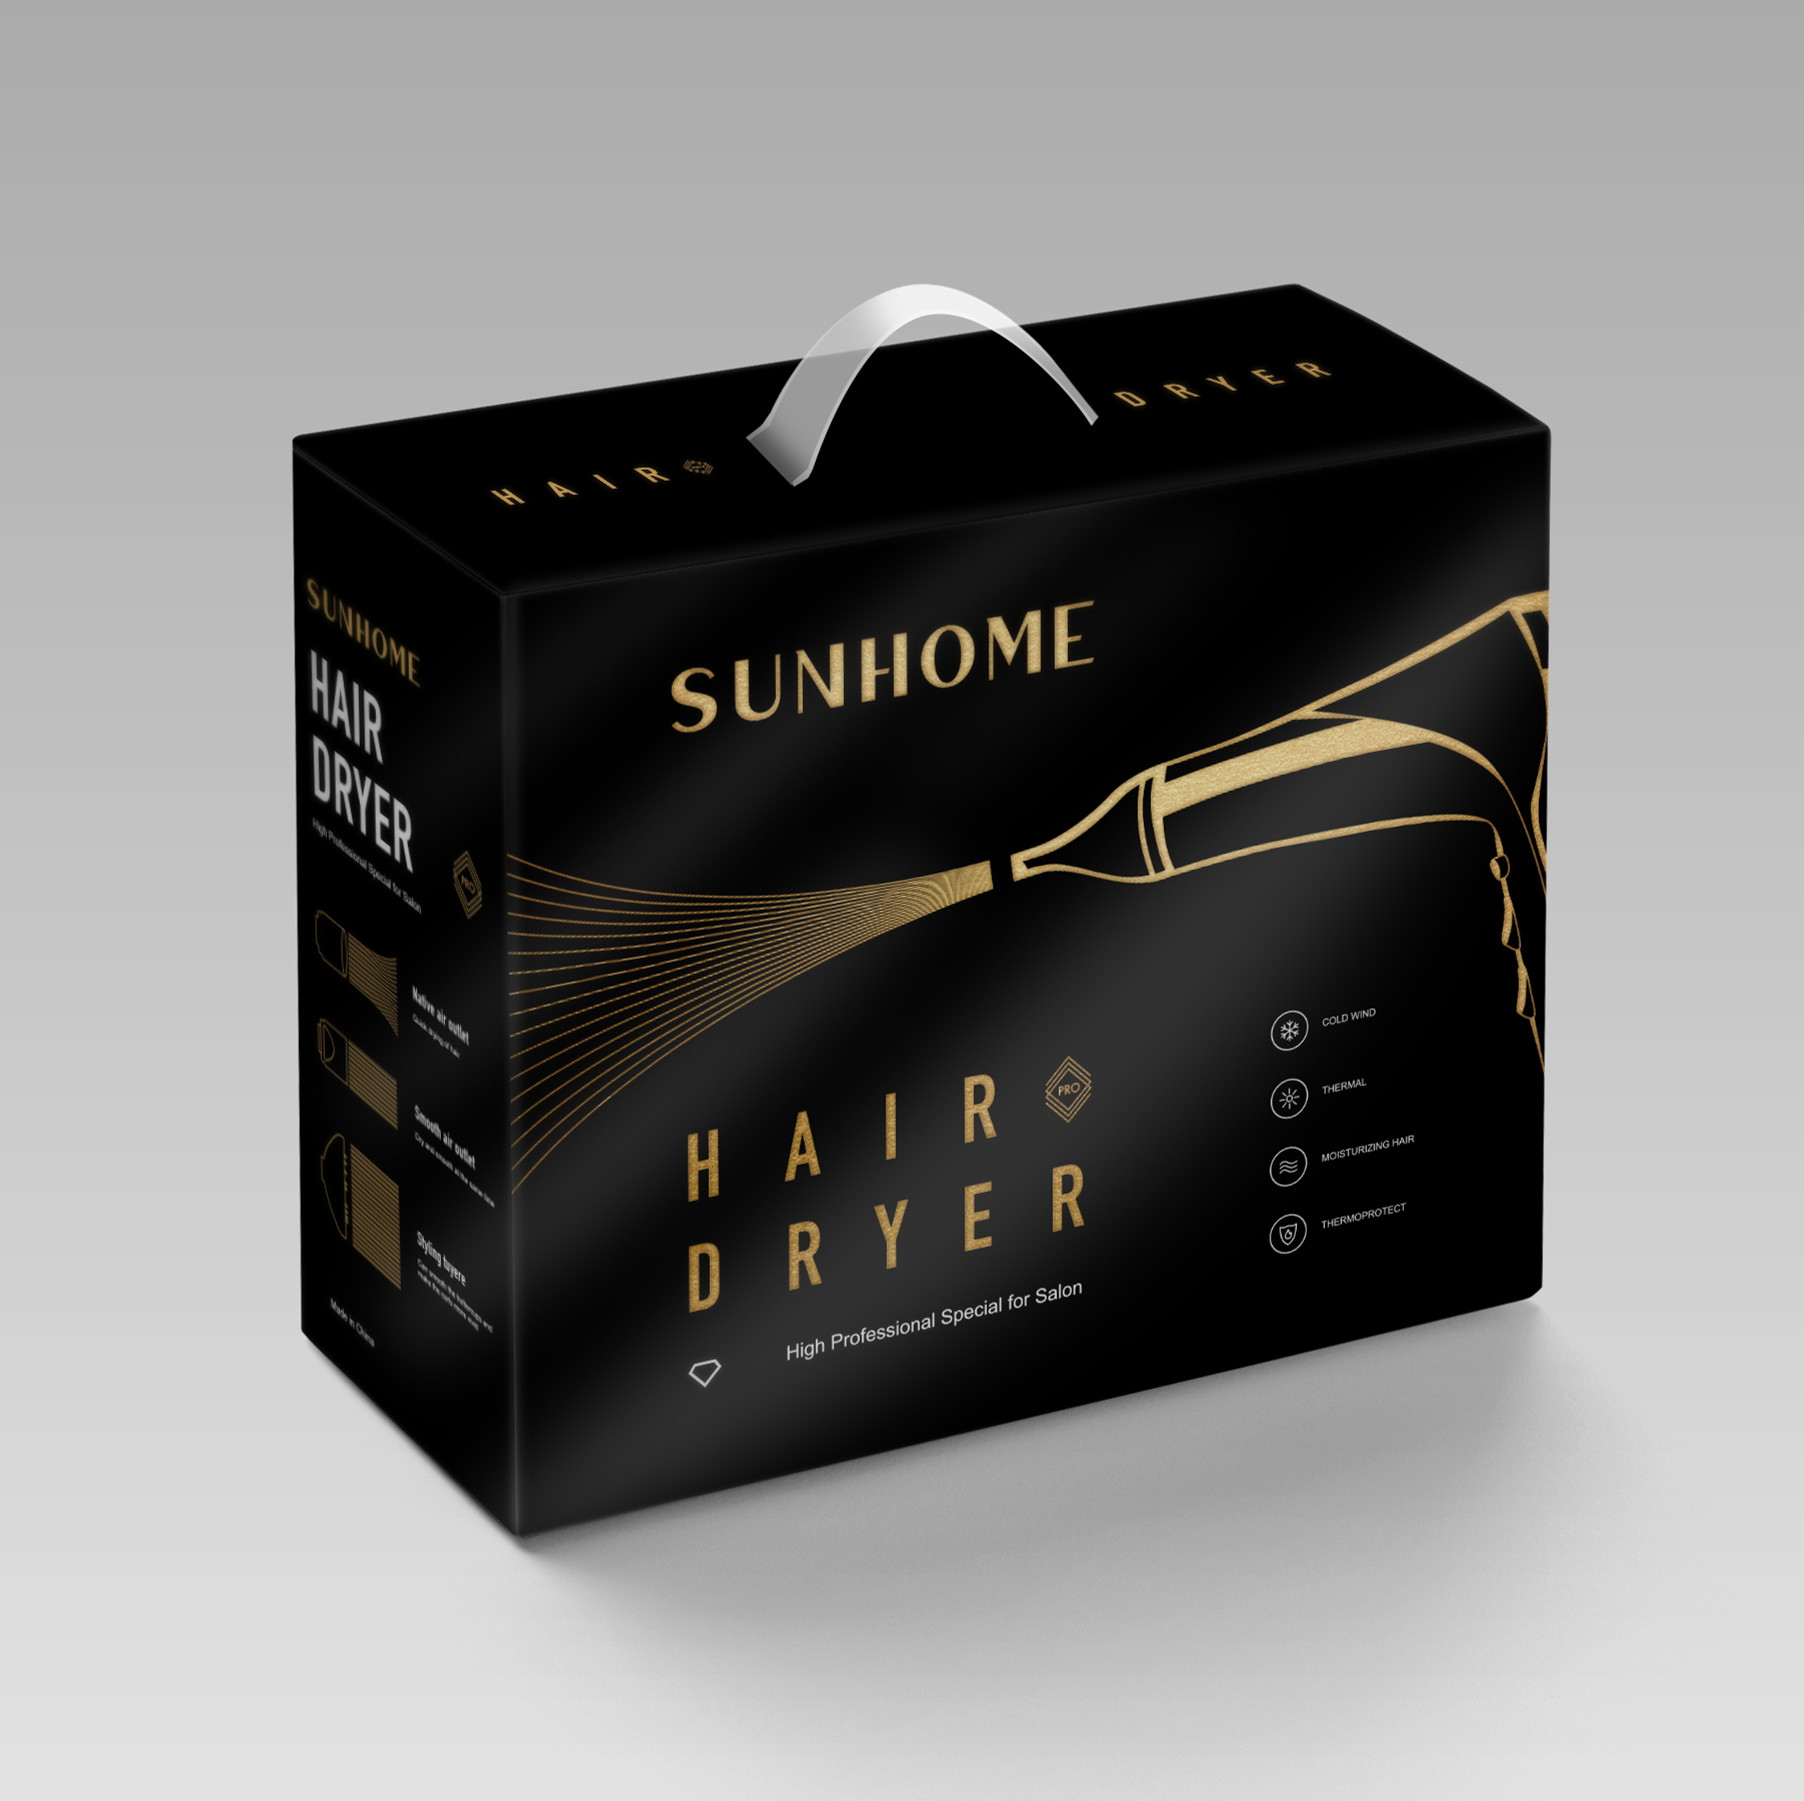 7-Piece Professional Hair Dryer Black/Gold